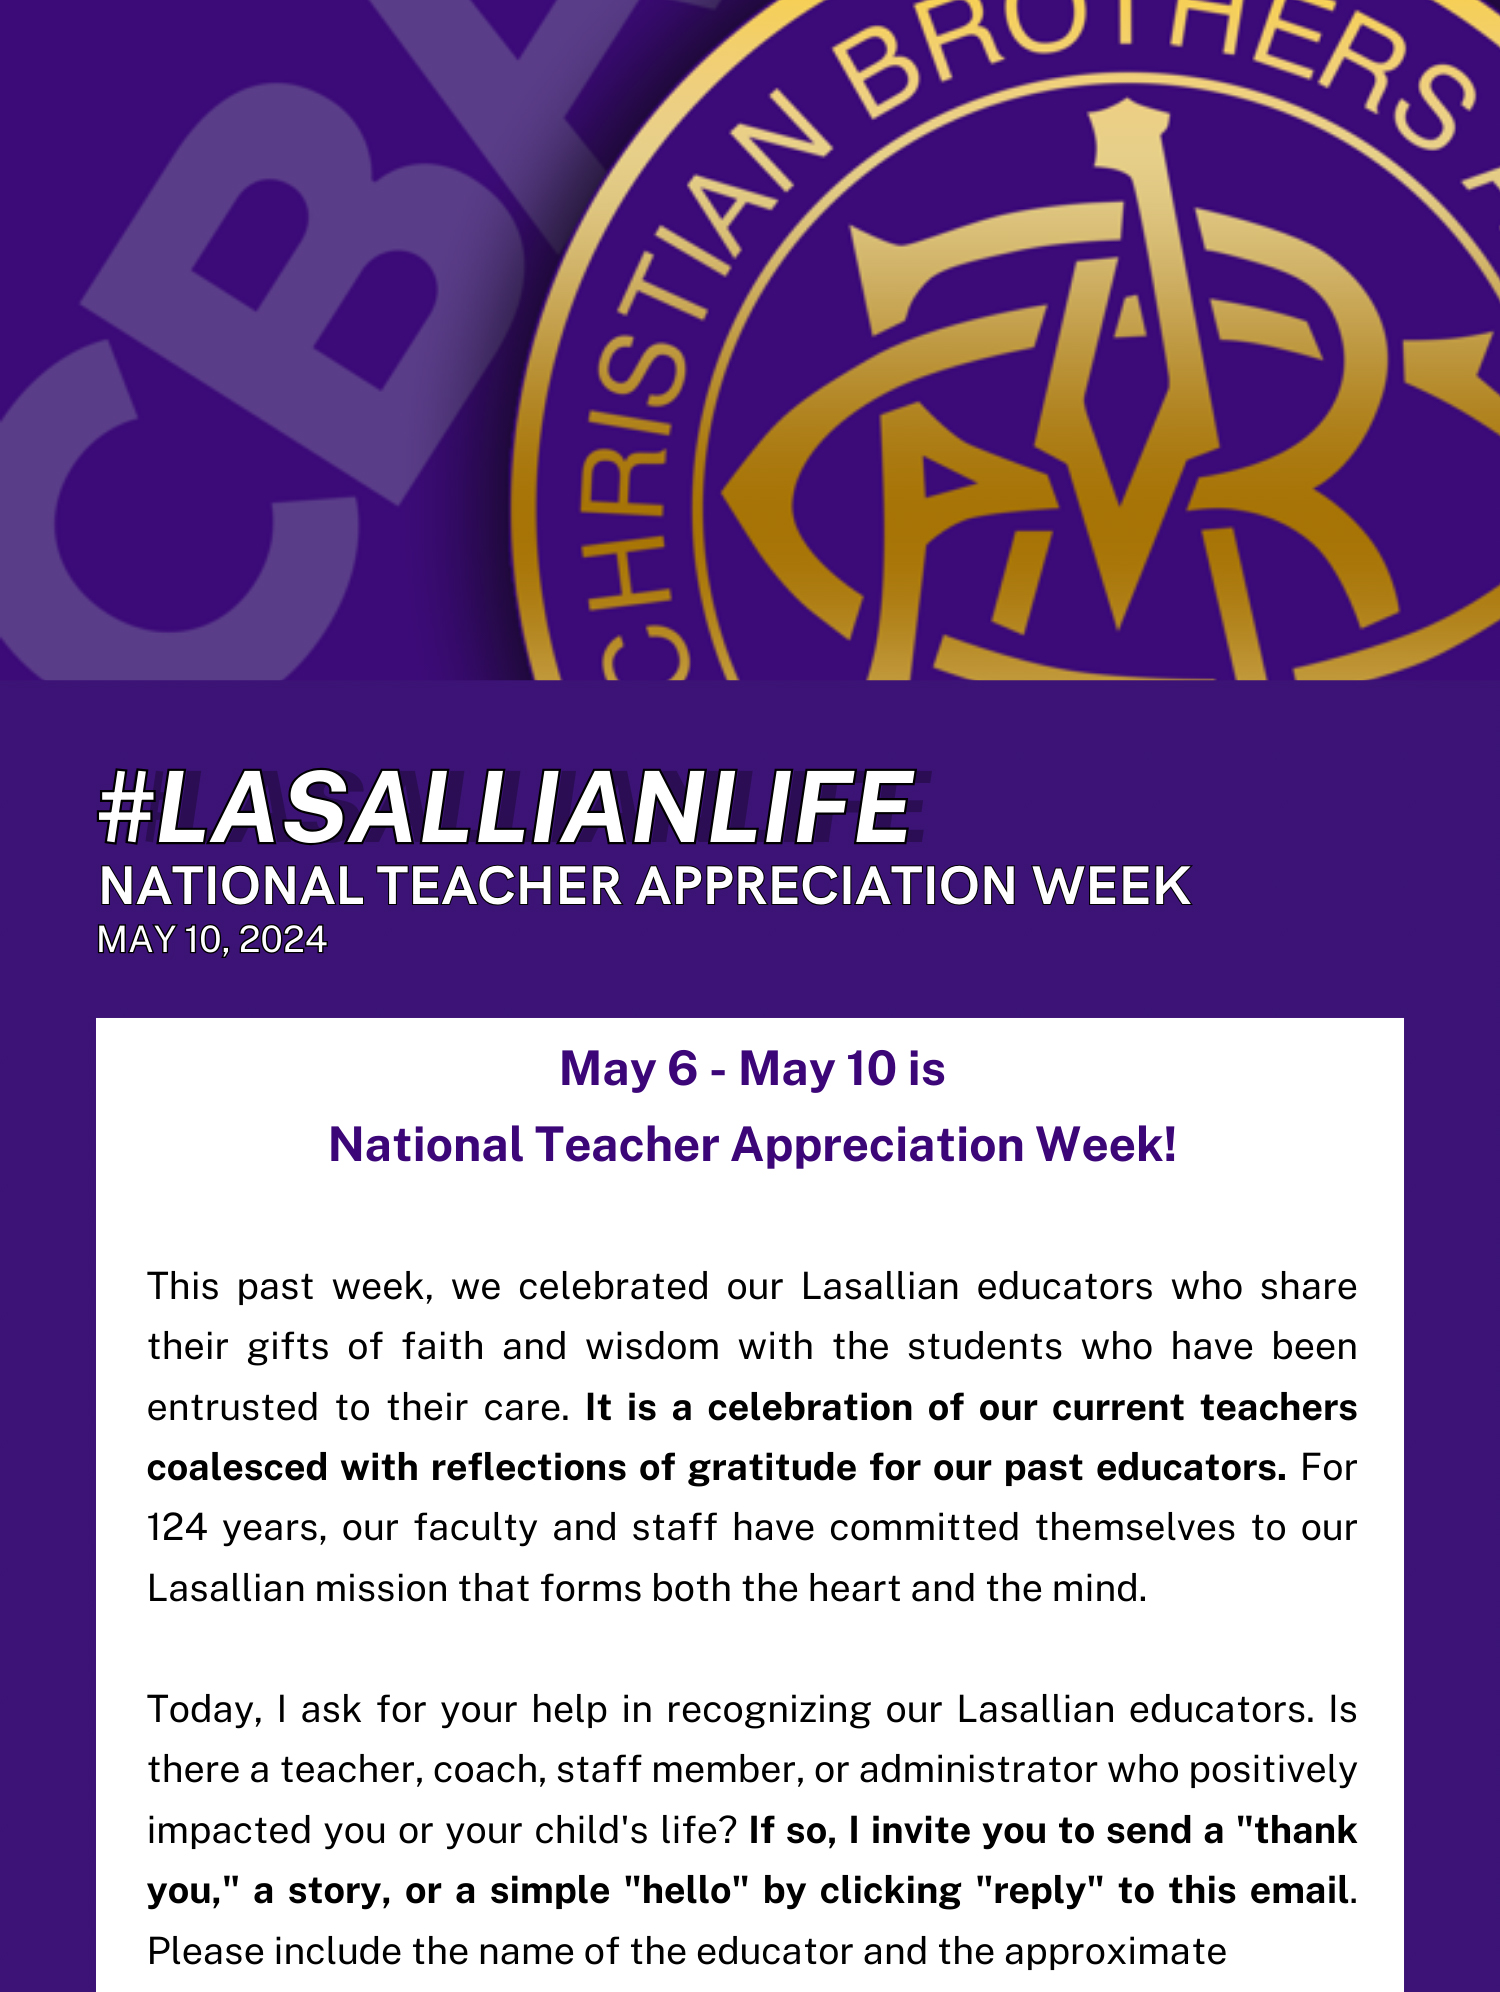 #LasallianLife : Fences - National Teacher Appreciation Week